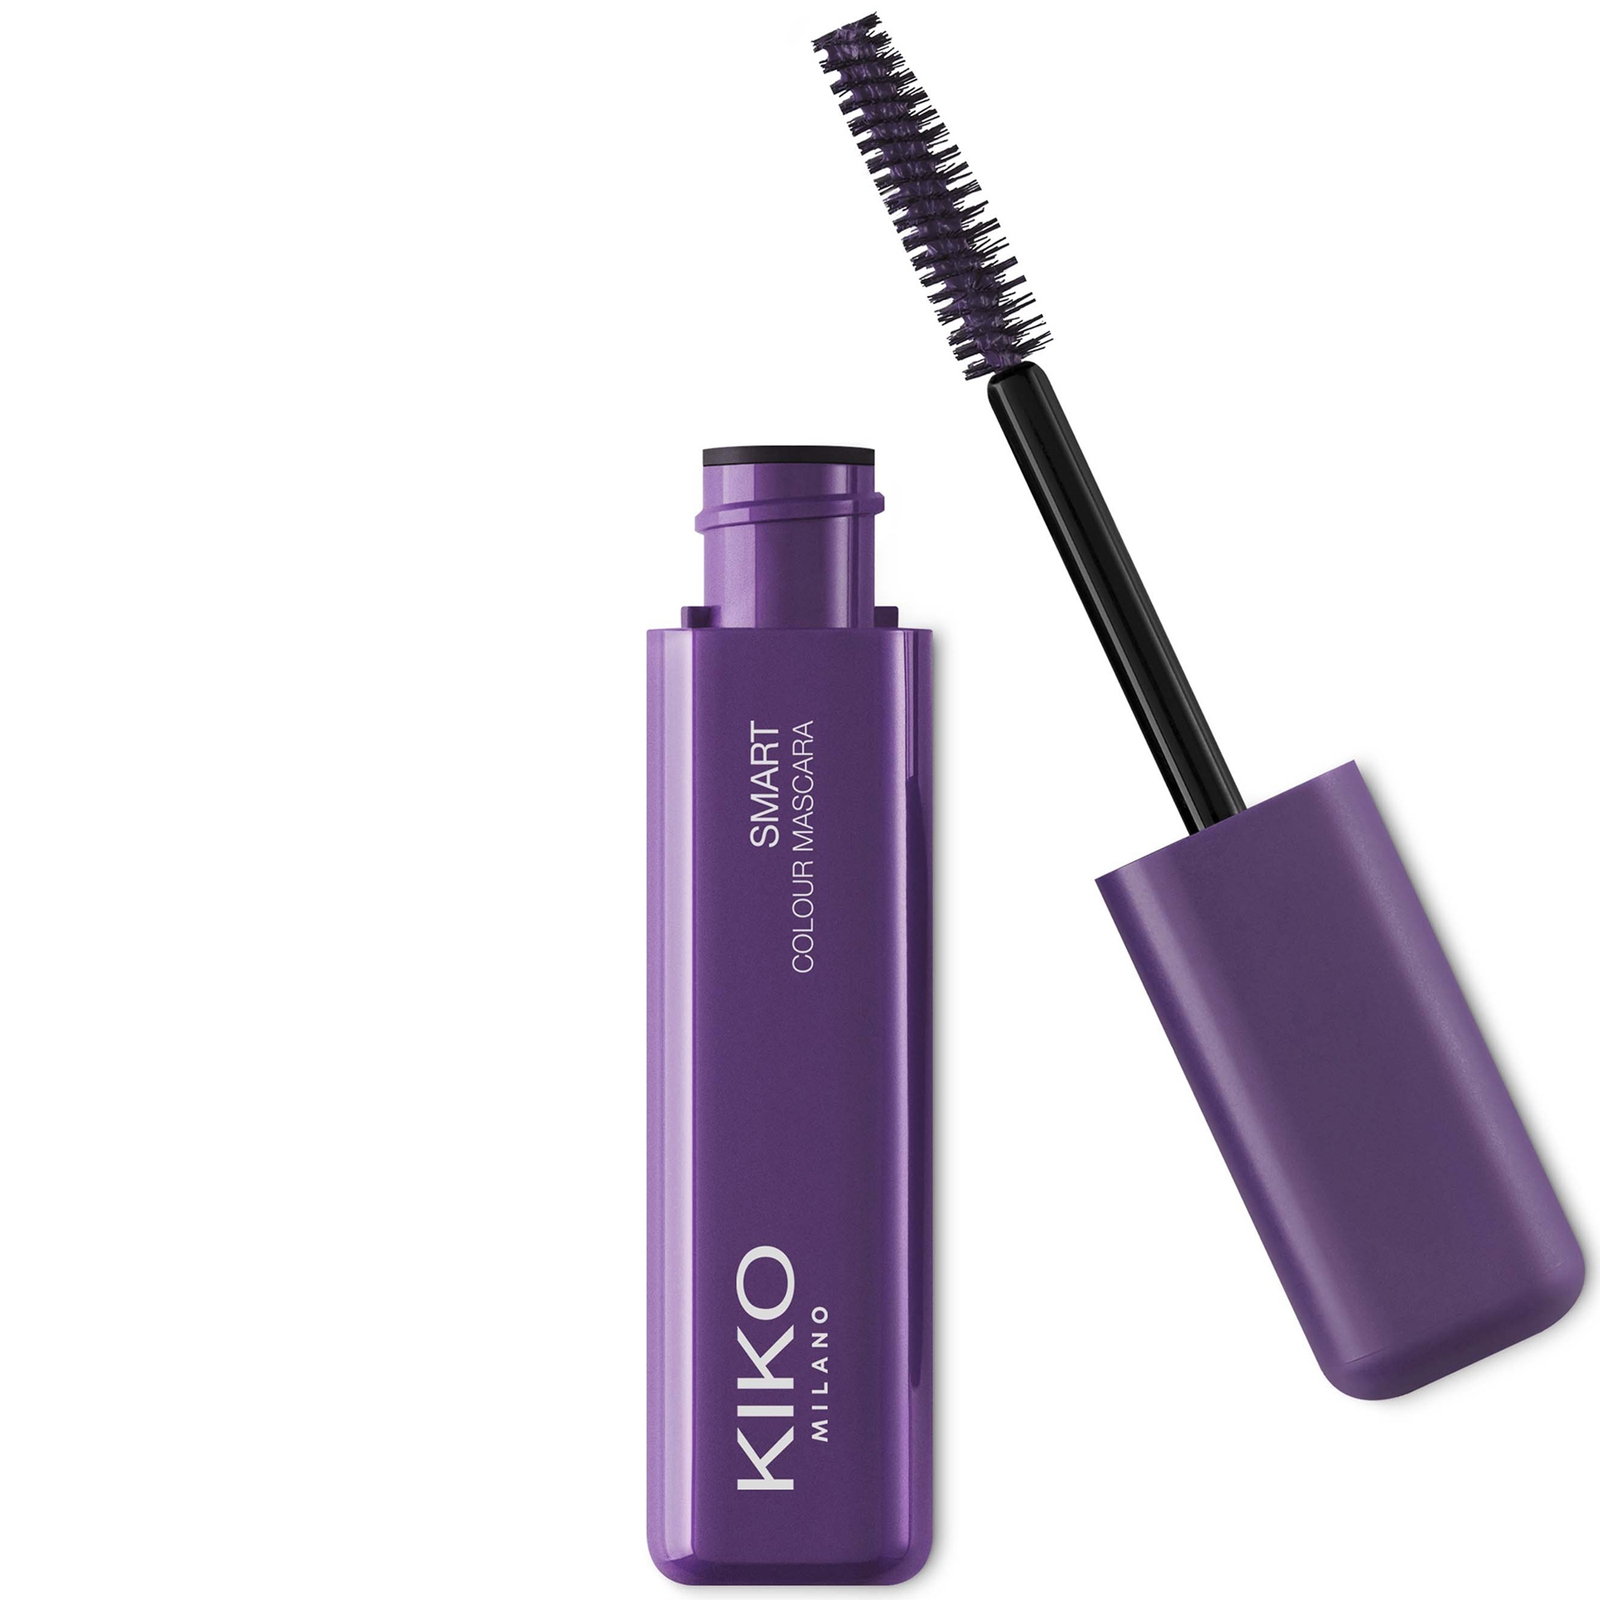 KIKO Milano Smart Colour Mascara 8ml (Various Shades) - 01 Metallic Purple